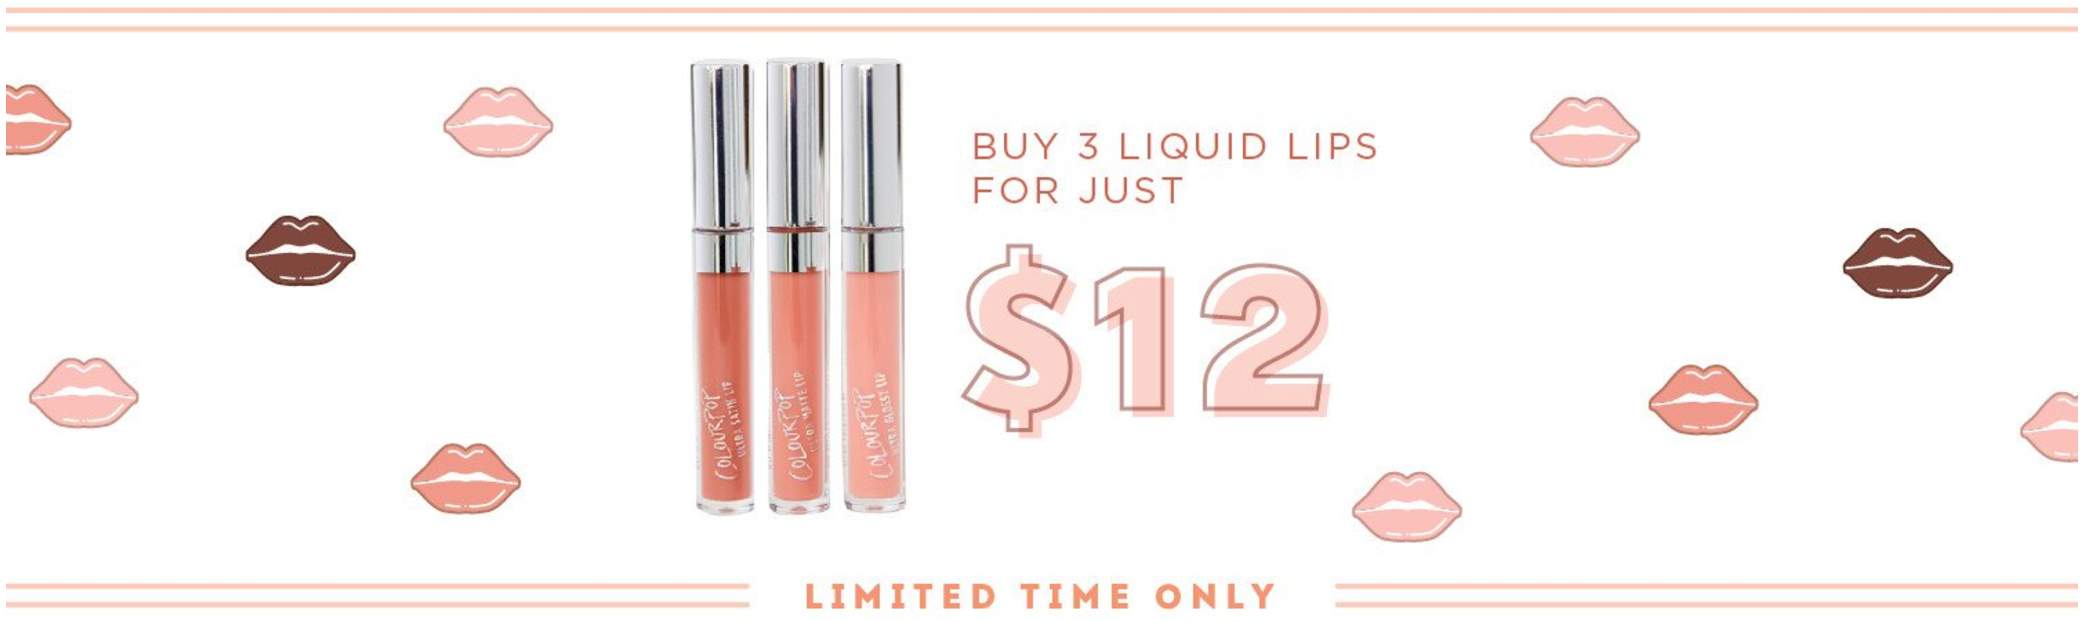 Buy 3 Liquid Lipsticks for $12